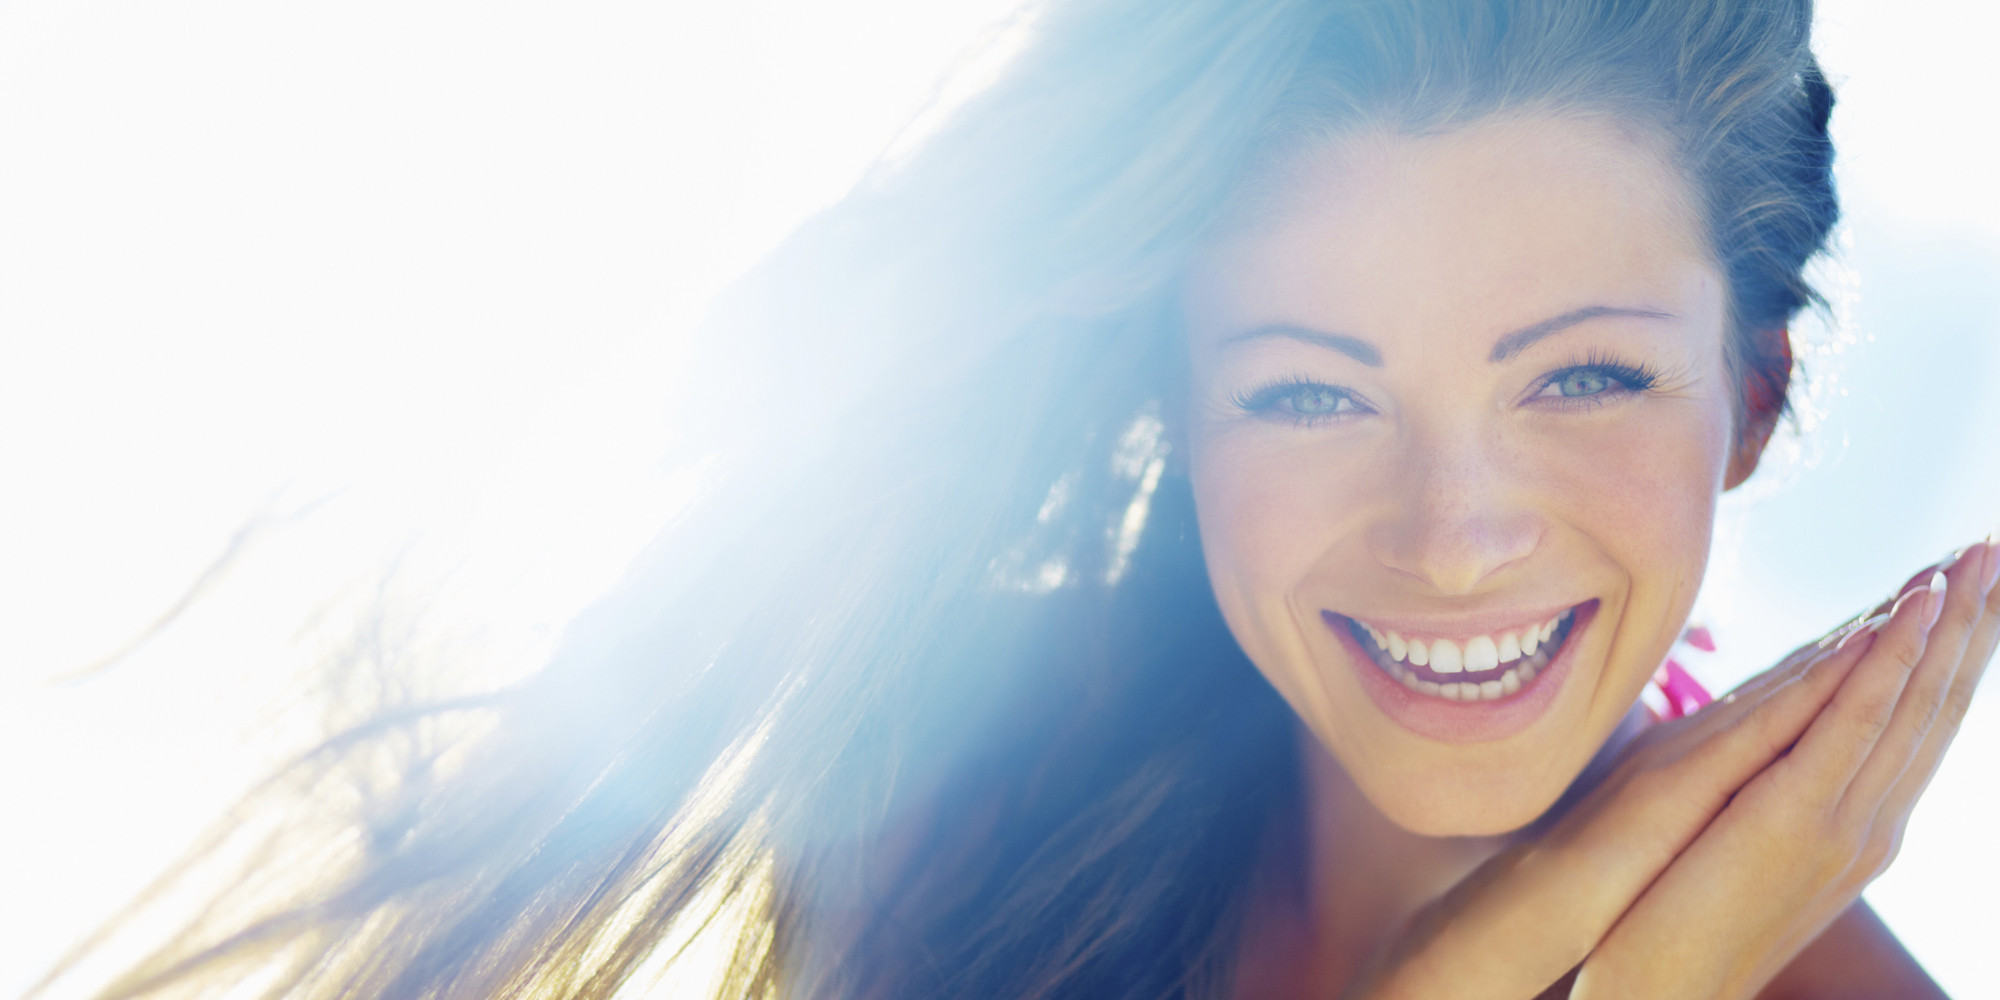 Closeup of a beautiful smiling young woman